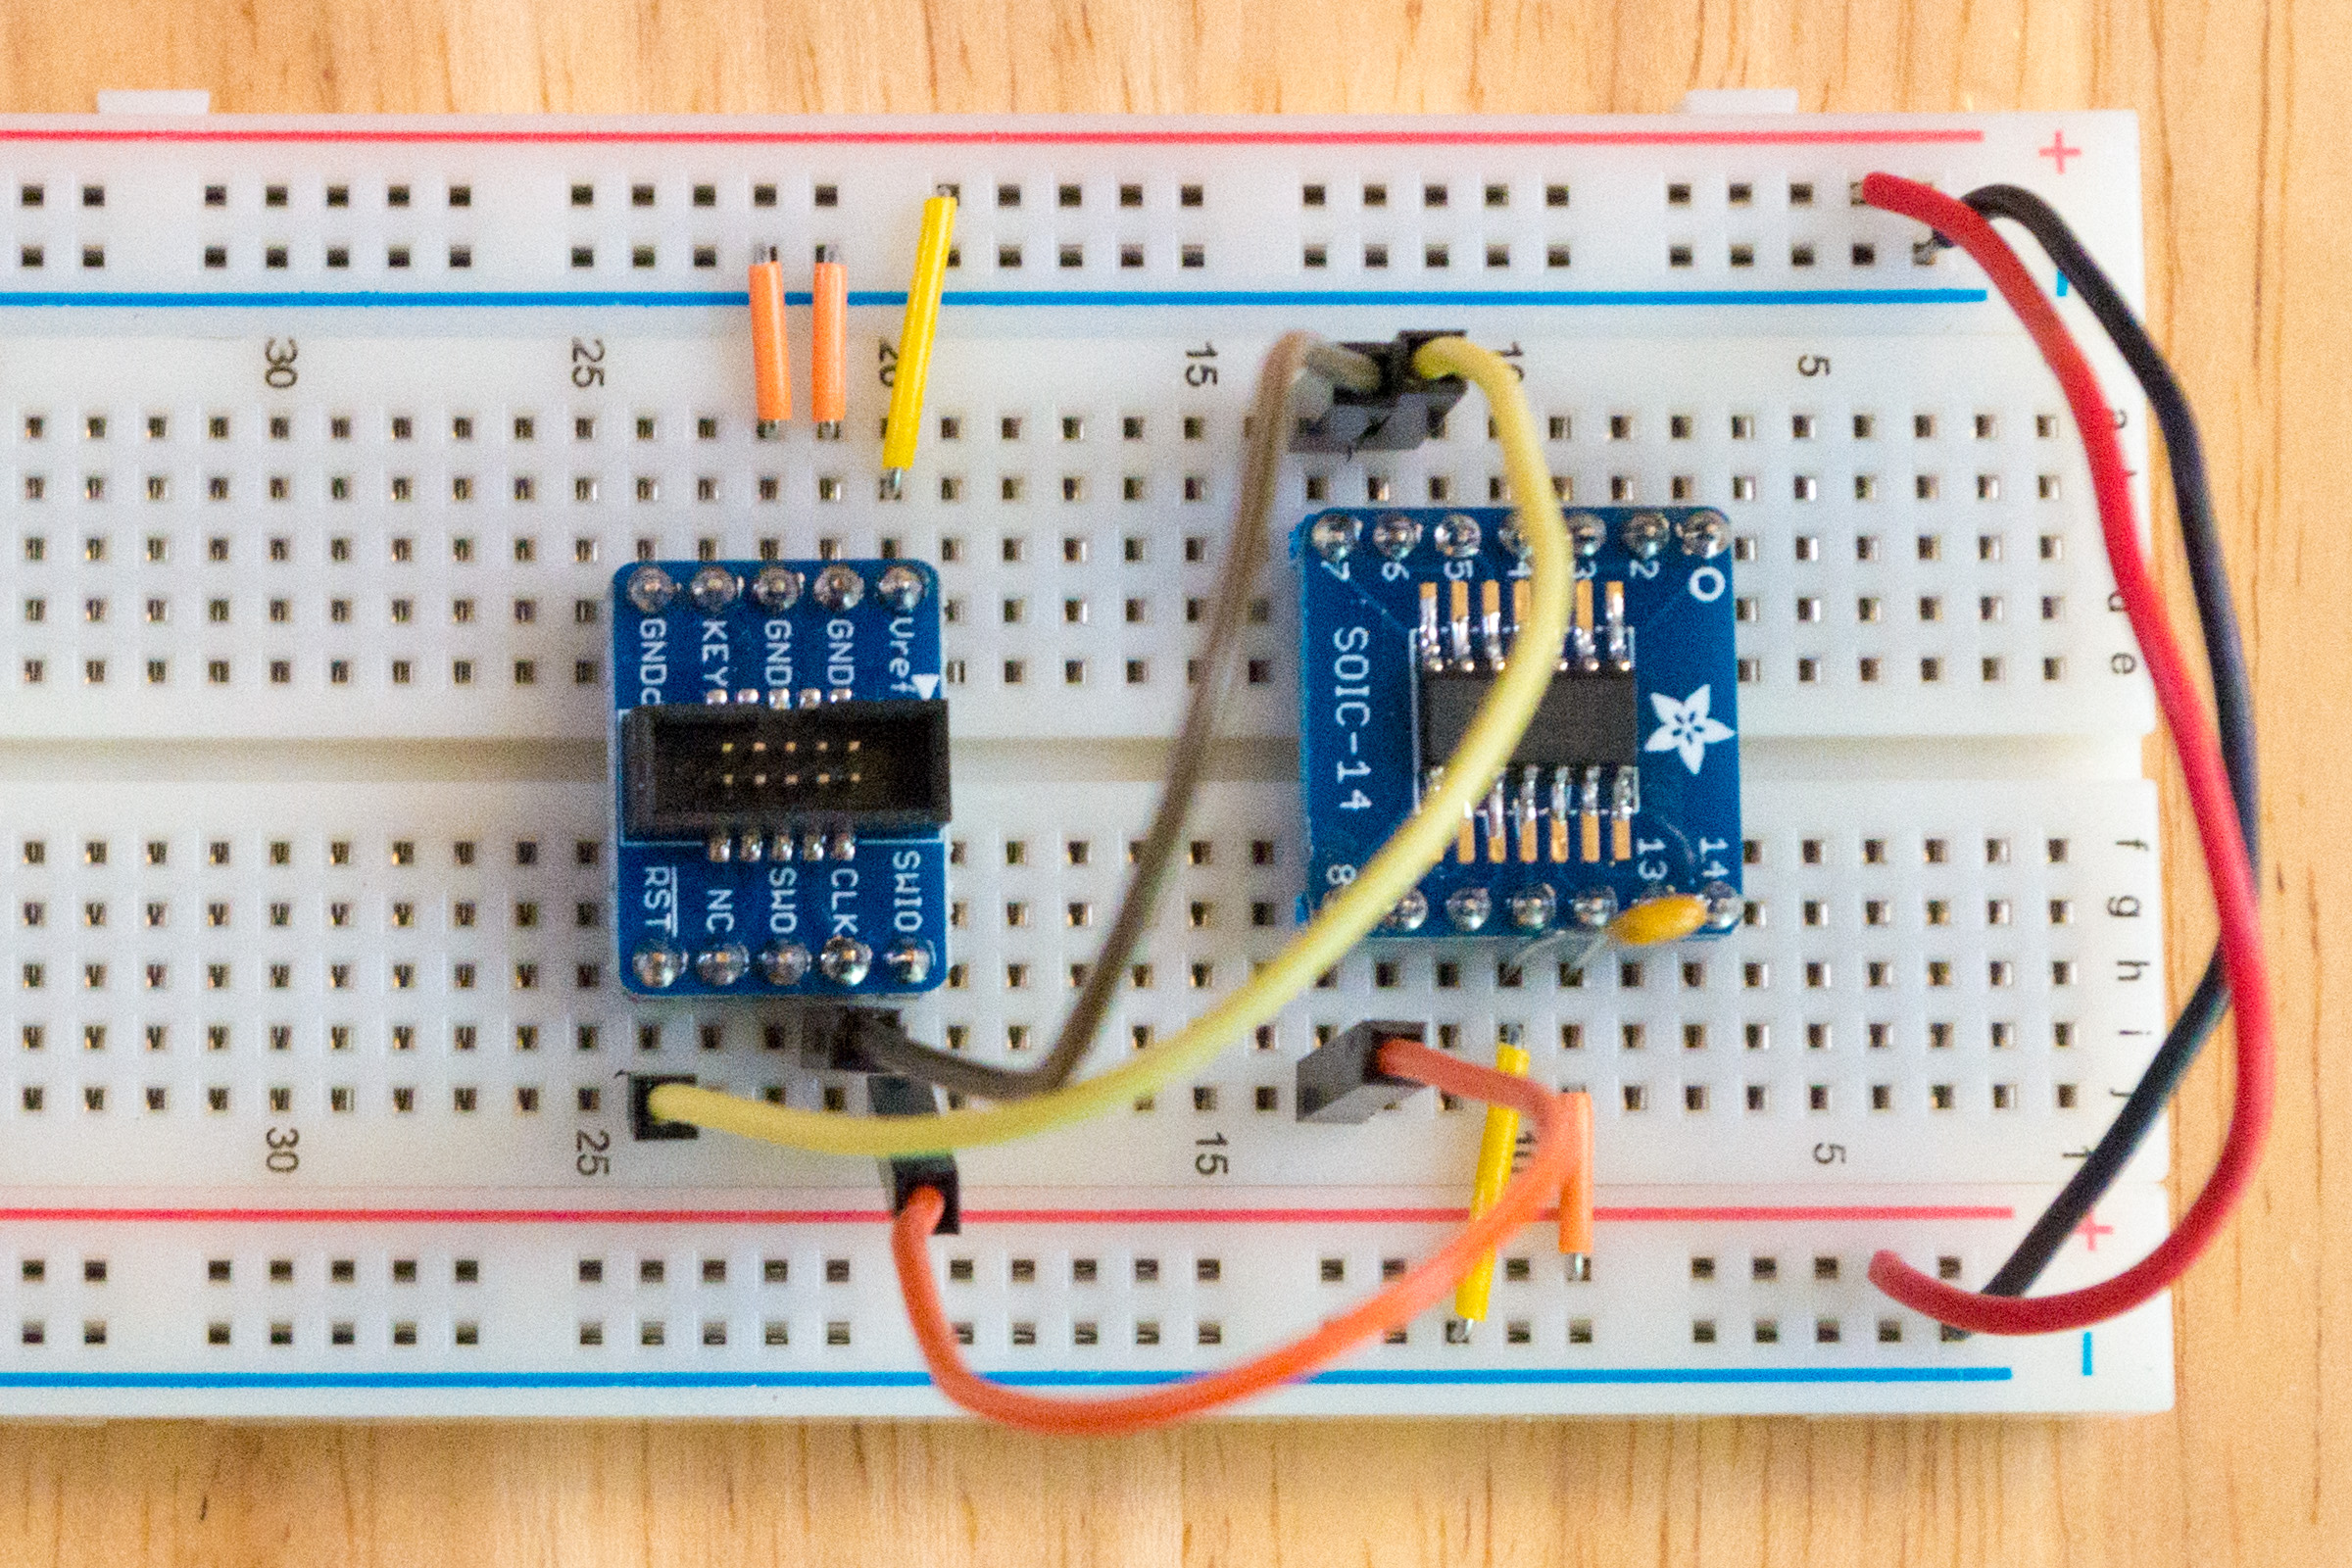 Microcontroller hooked up to debug header.